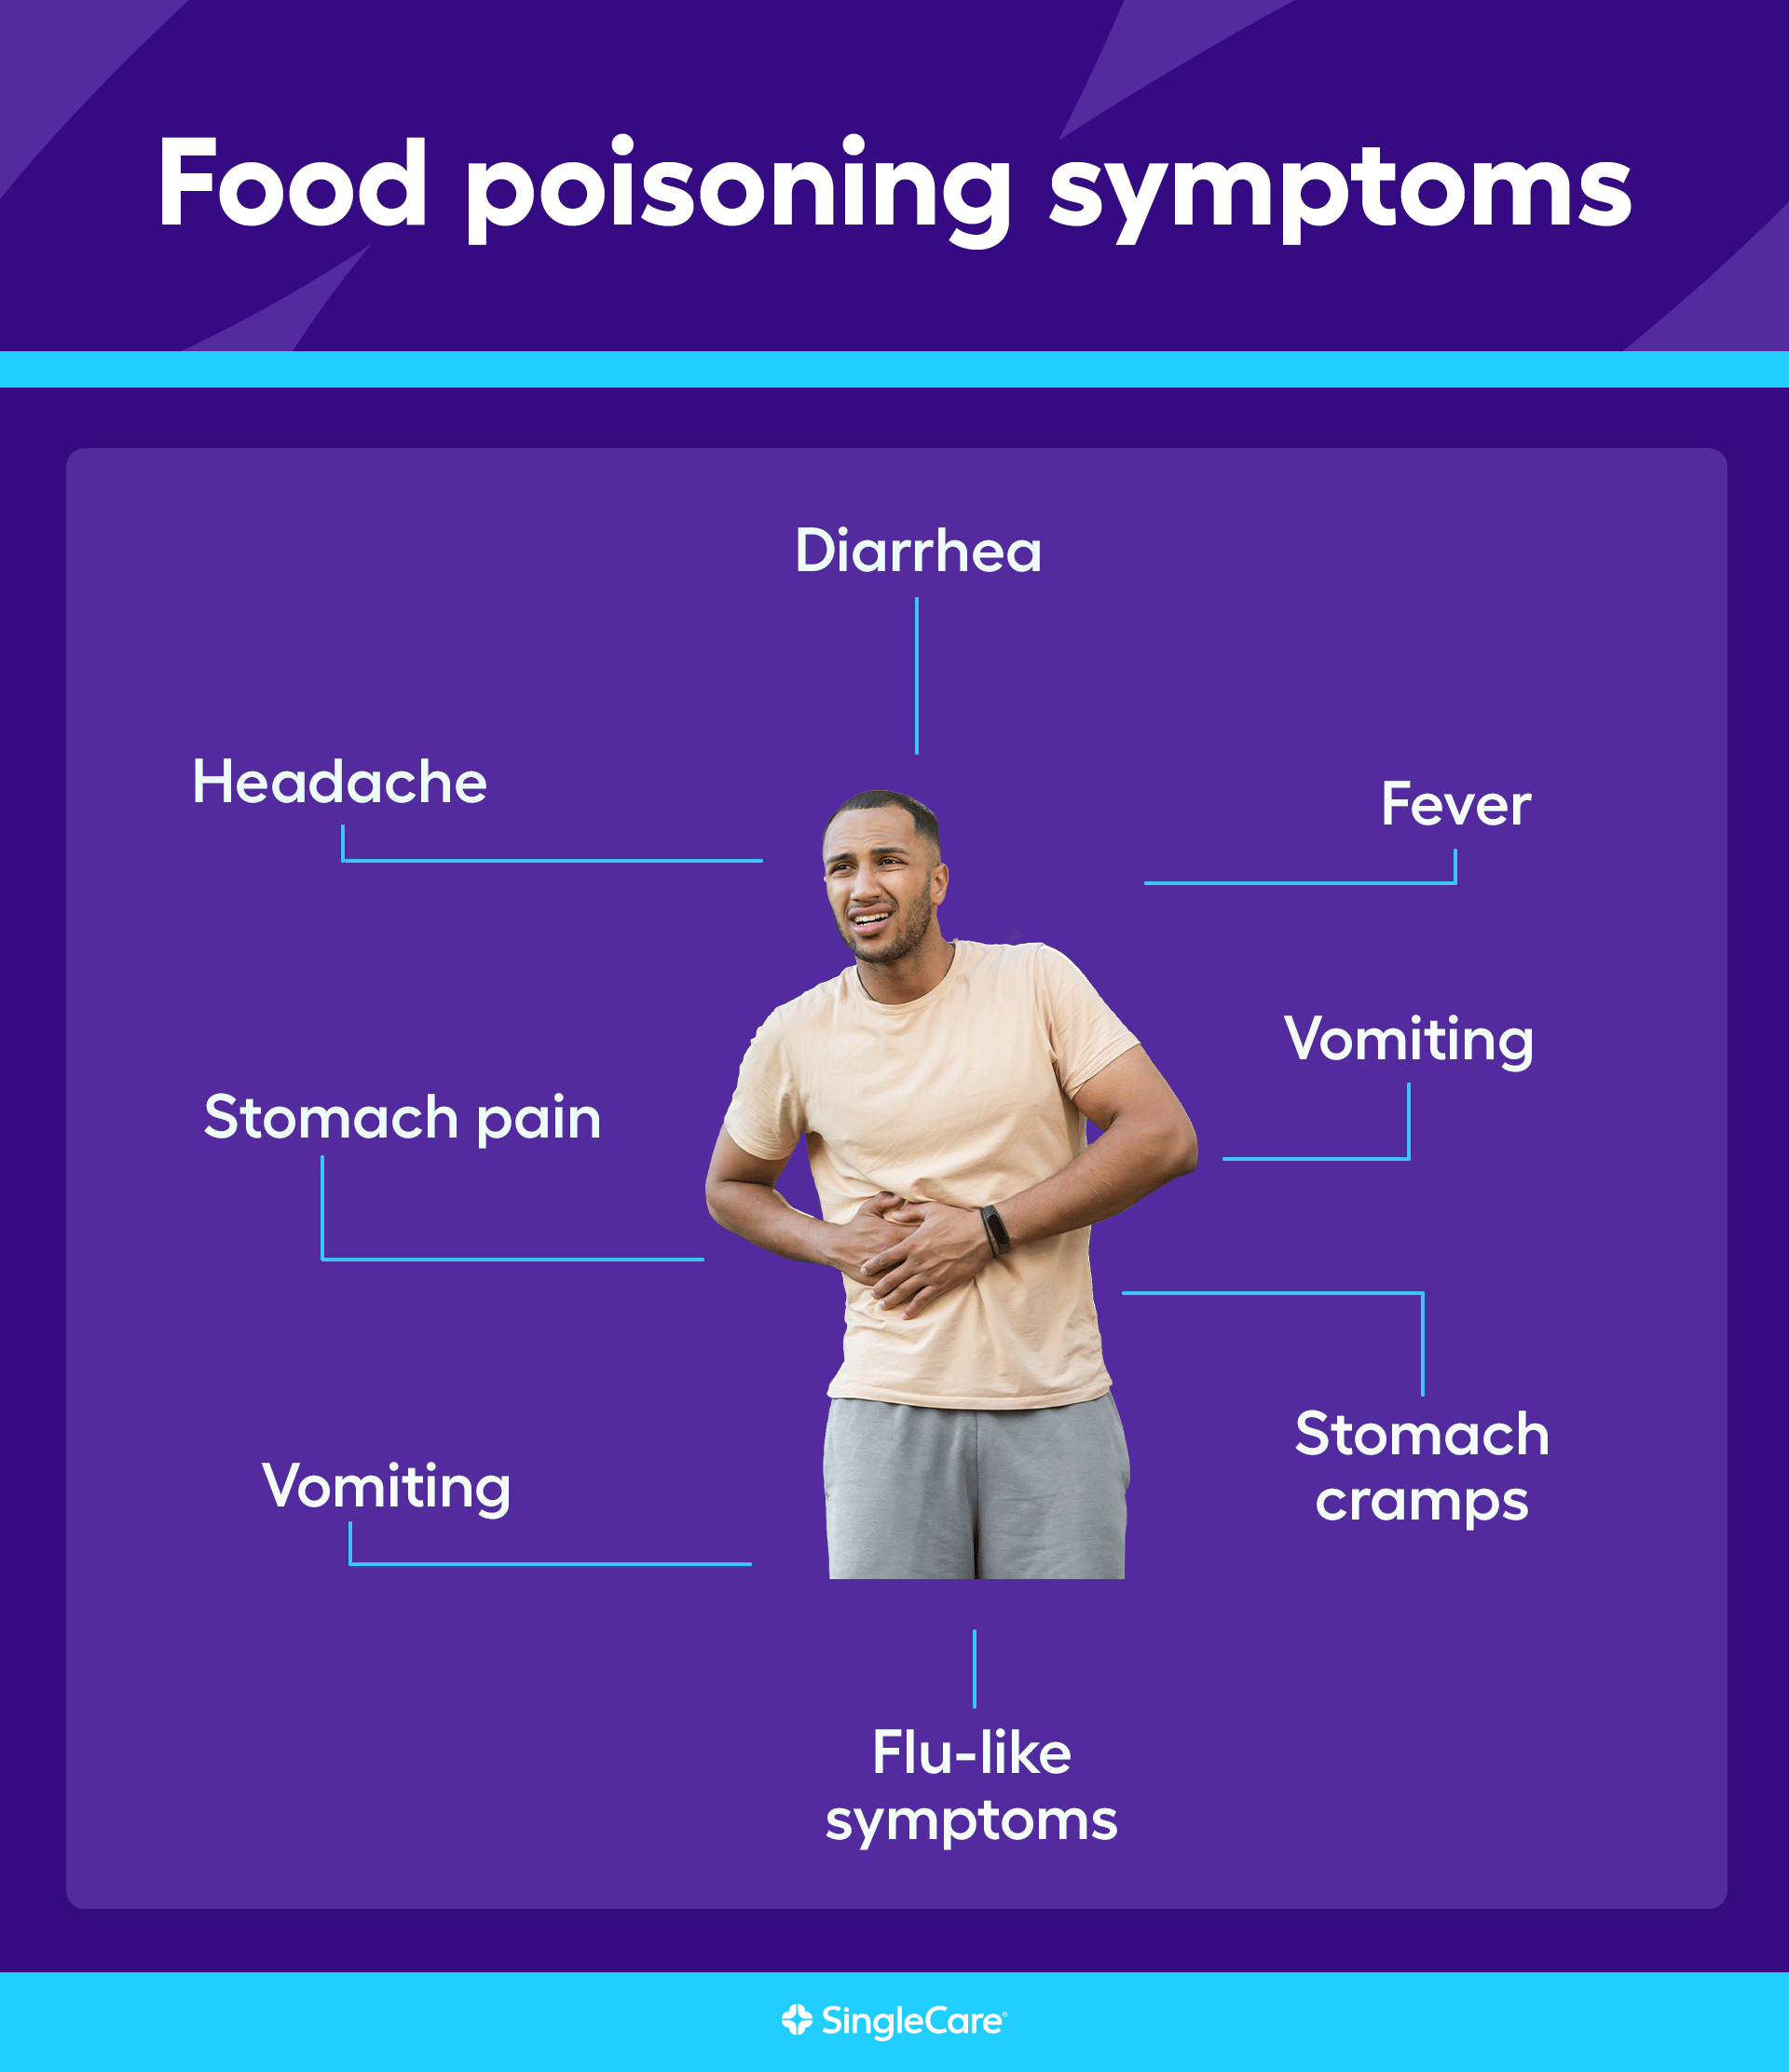 Symptoms of food poisoning